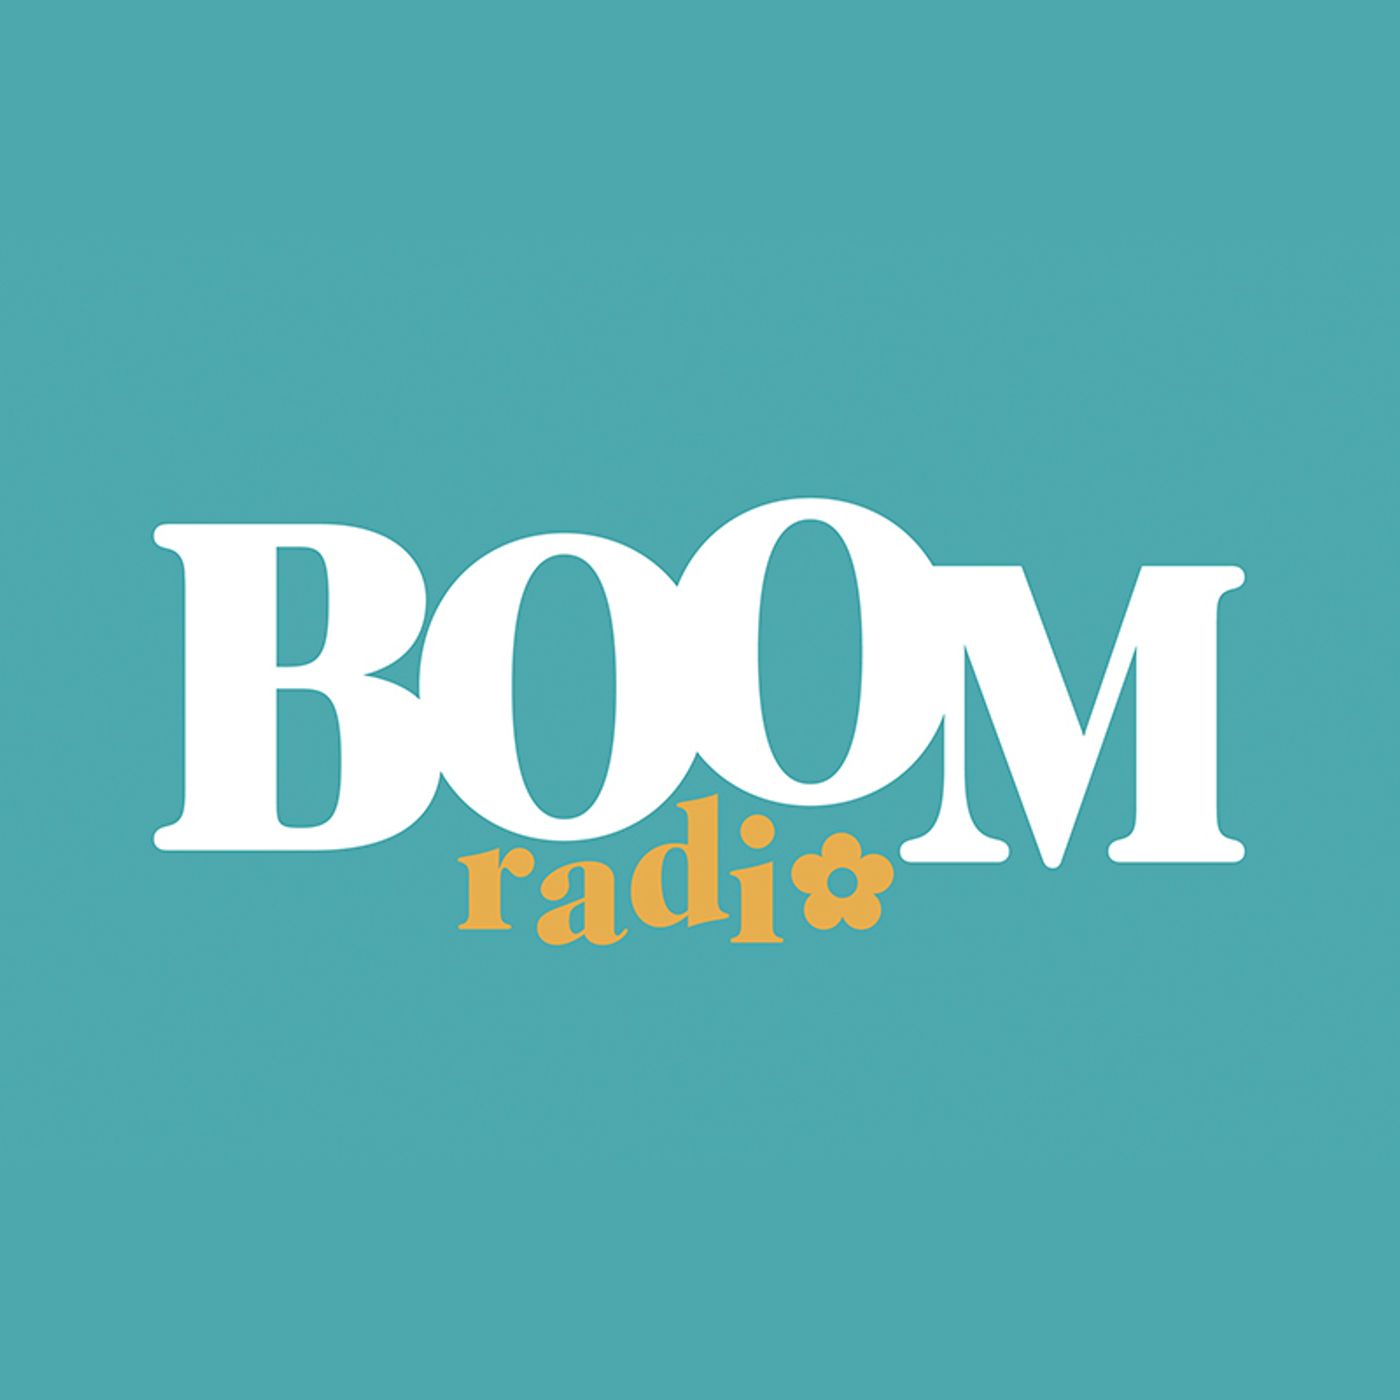 1706: Boom Radio launch - 2021